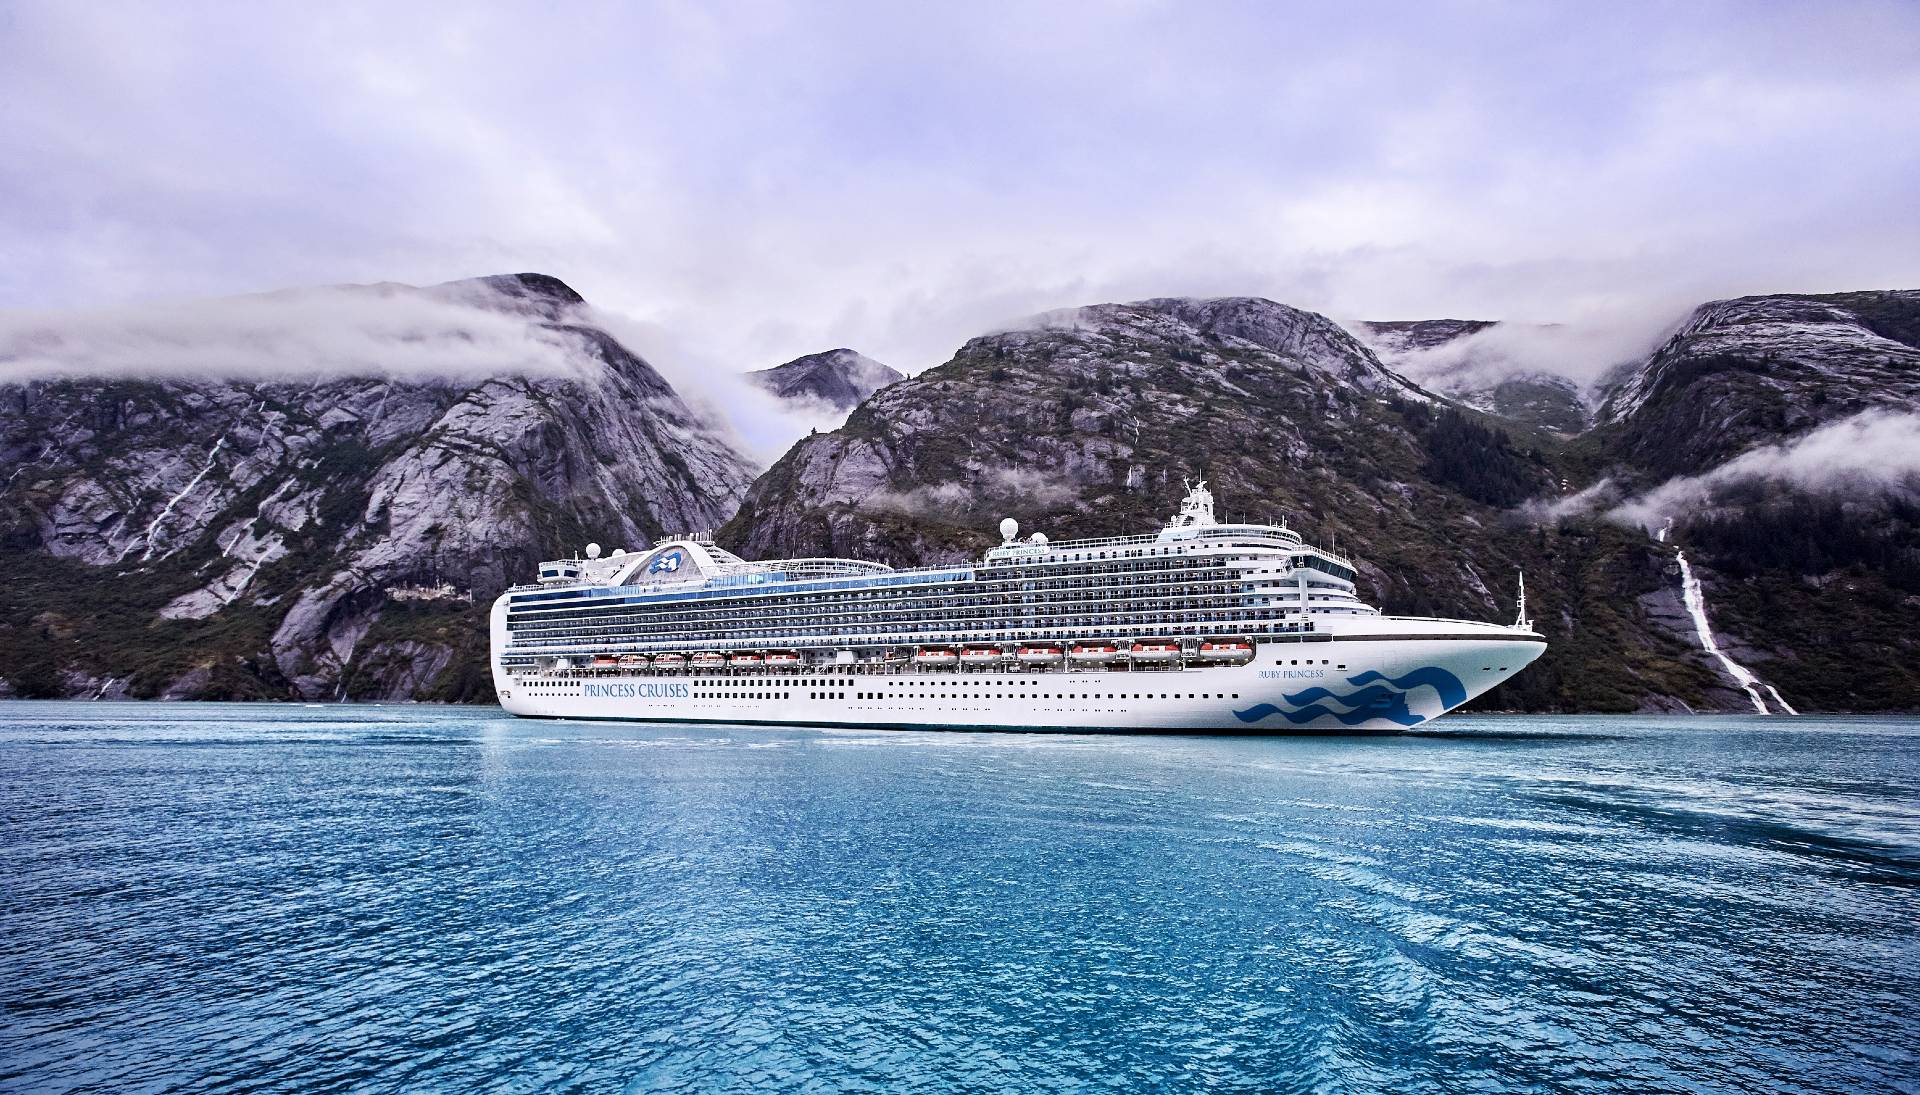 Princess's six-ship 2022 Alaska season includes Discovery Princess